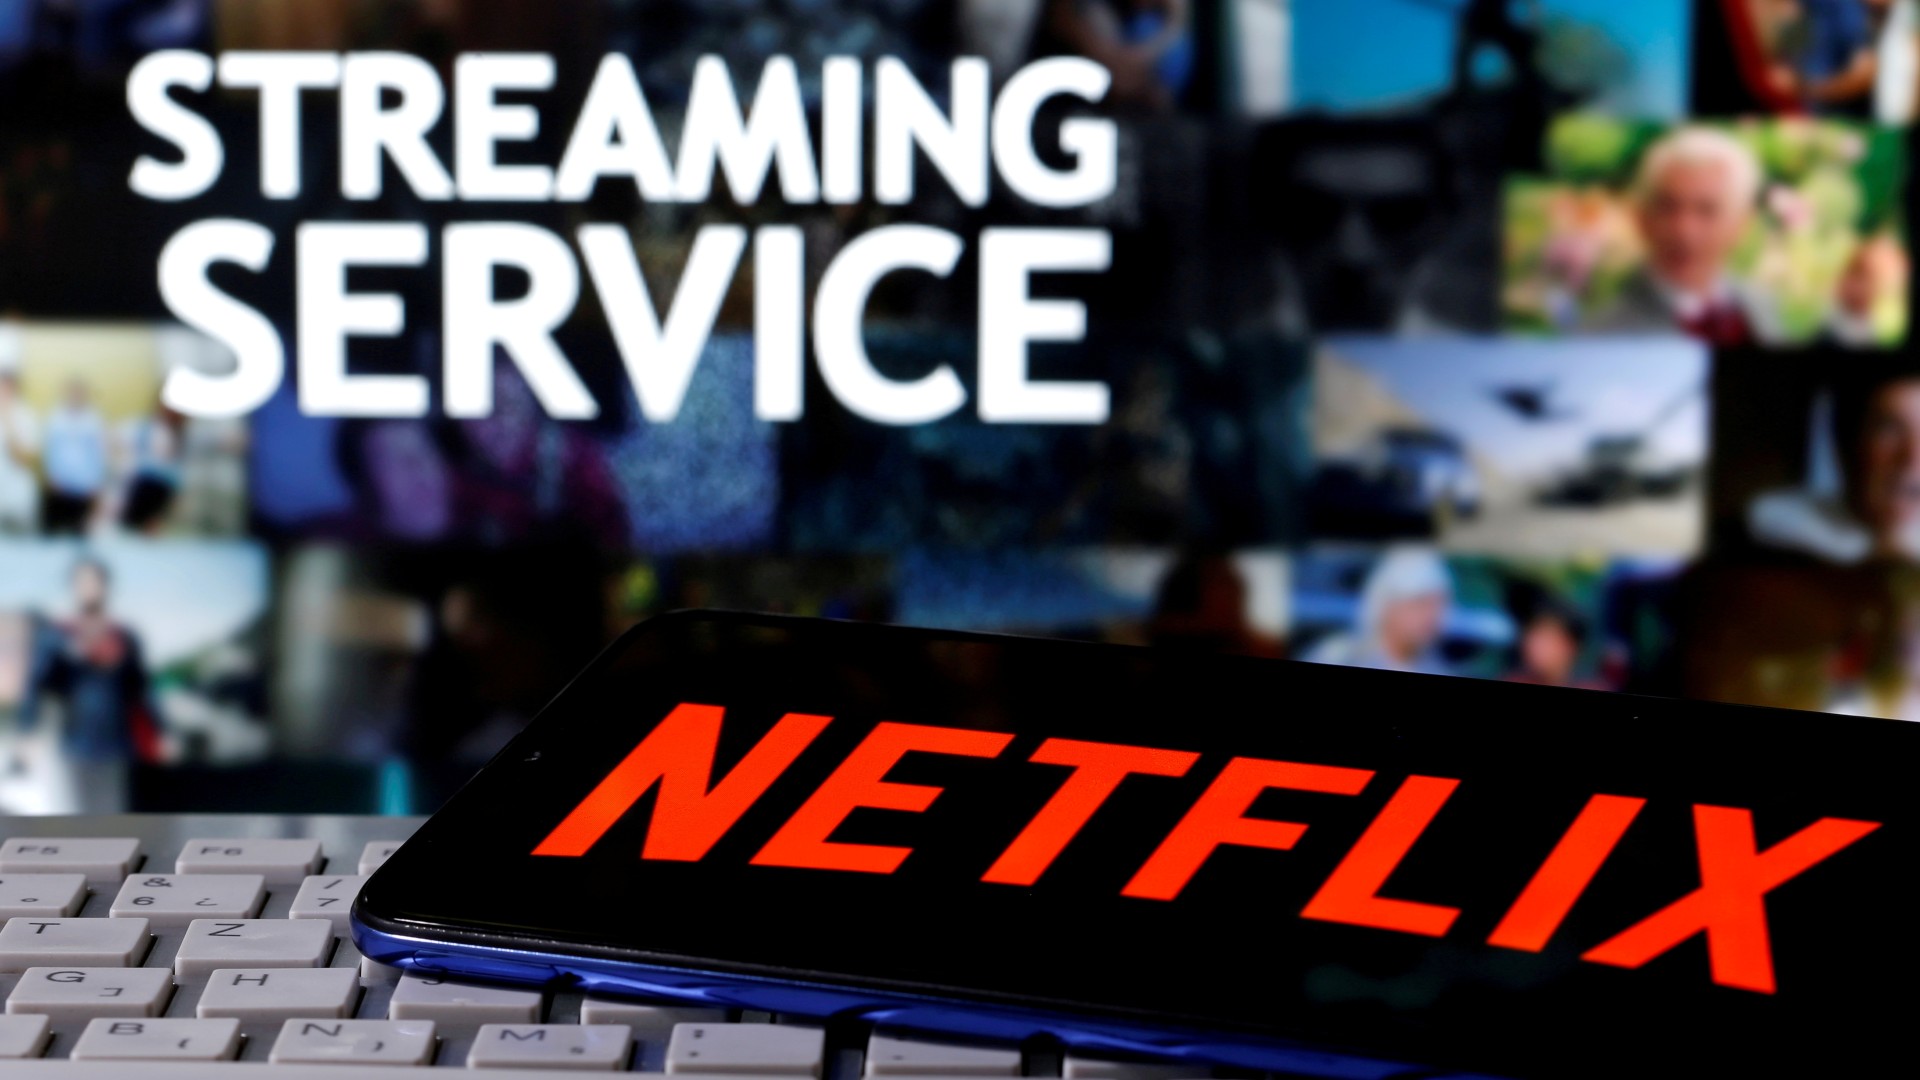 Facua denuncia a Netflix por la subida unilateral de sus tarifas